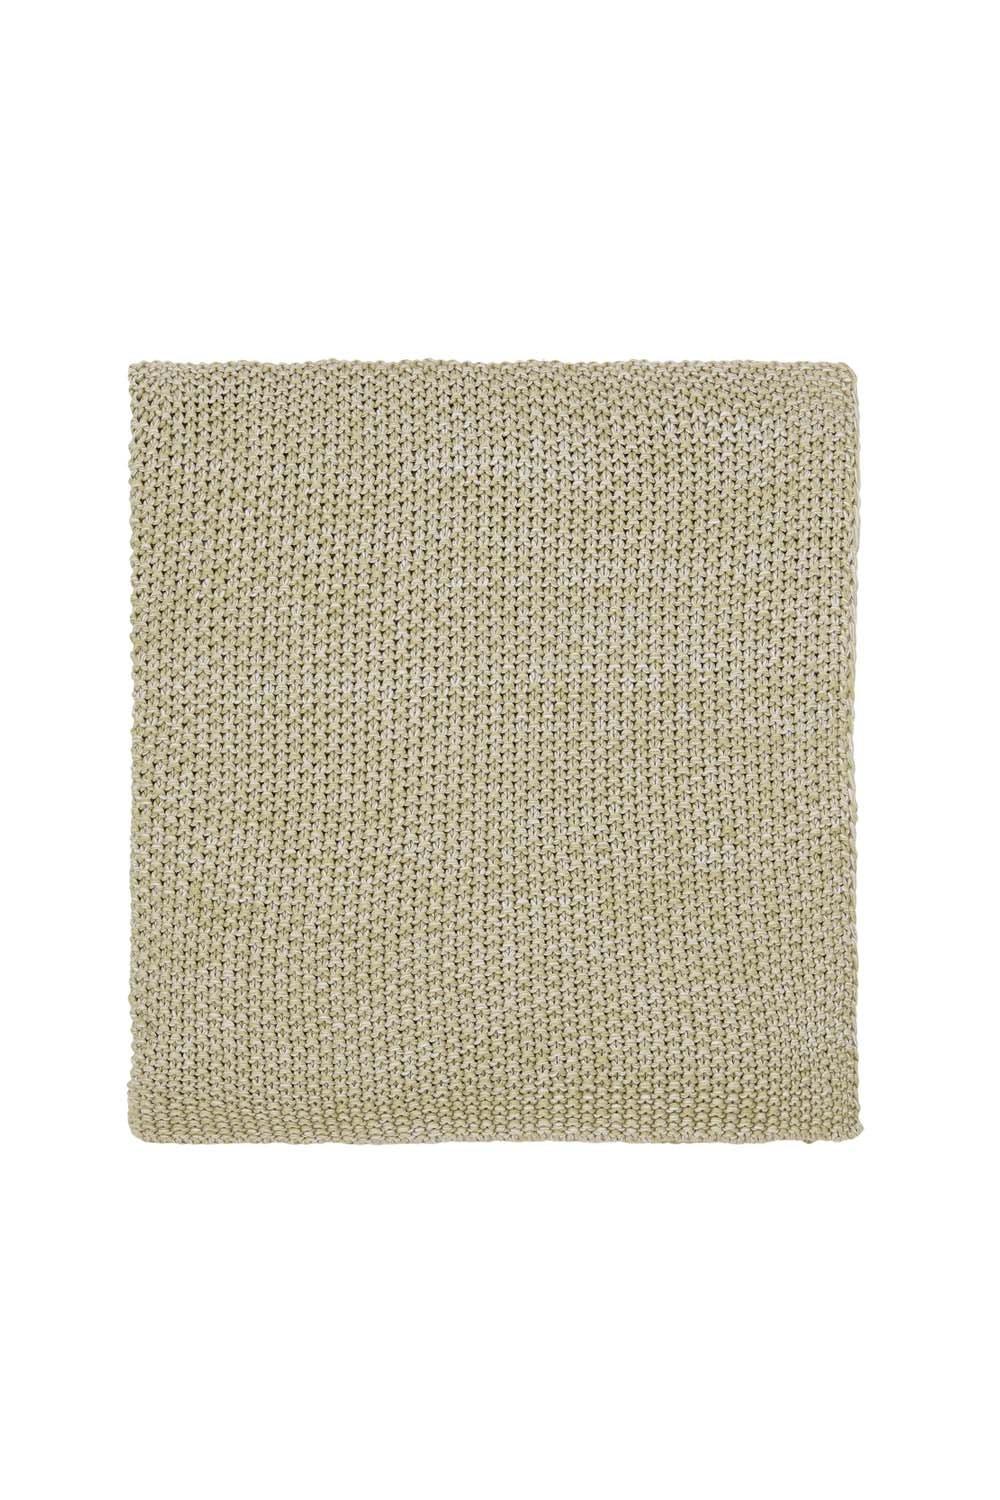 'Flo' Organic Cotton Knit Throw 130x170Cm